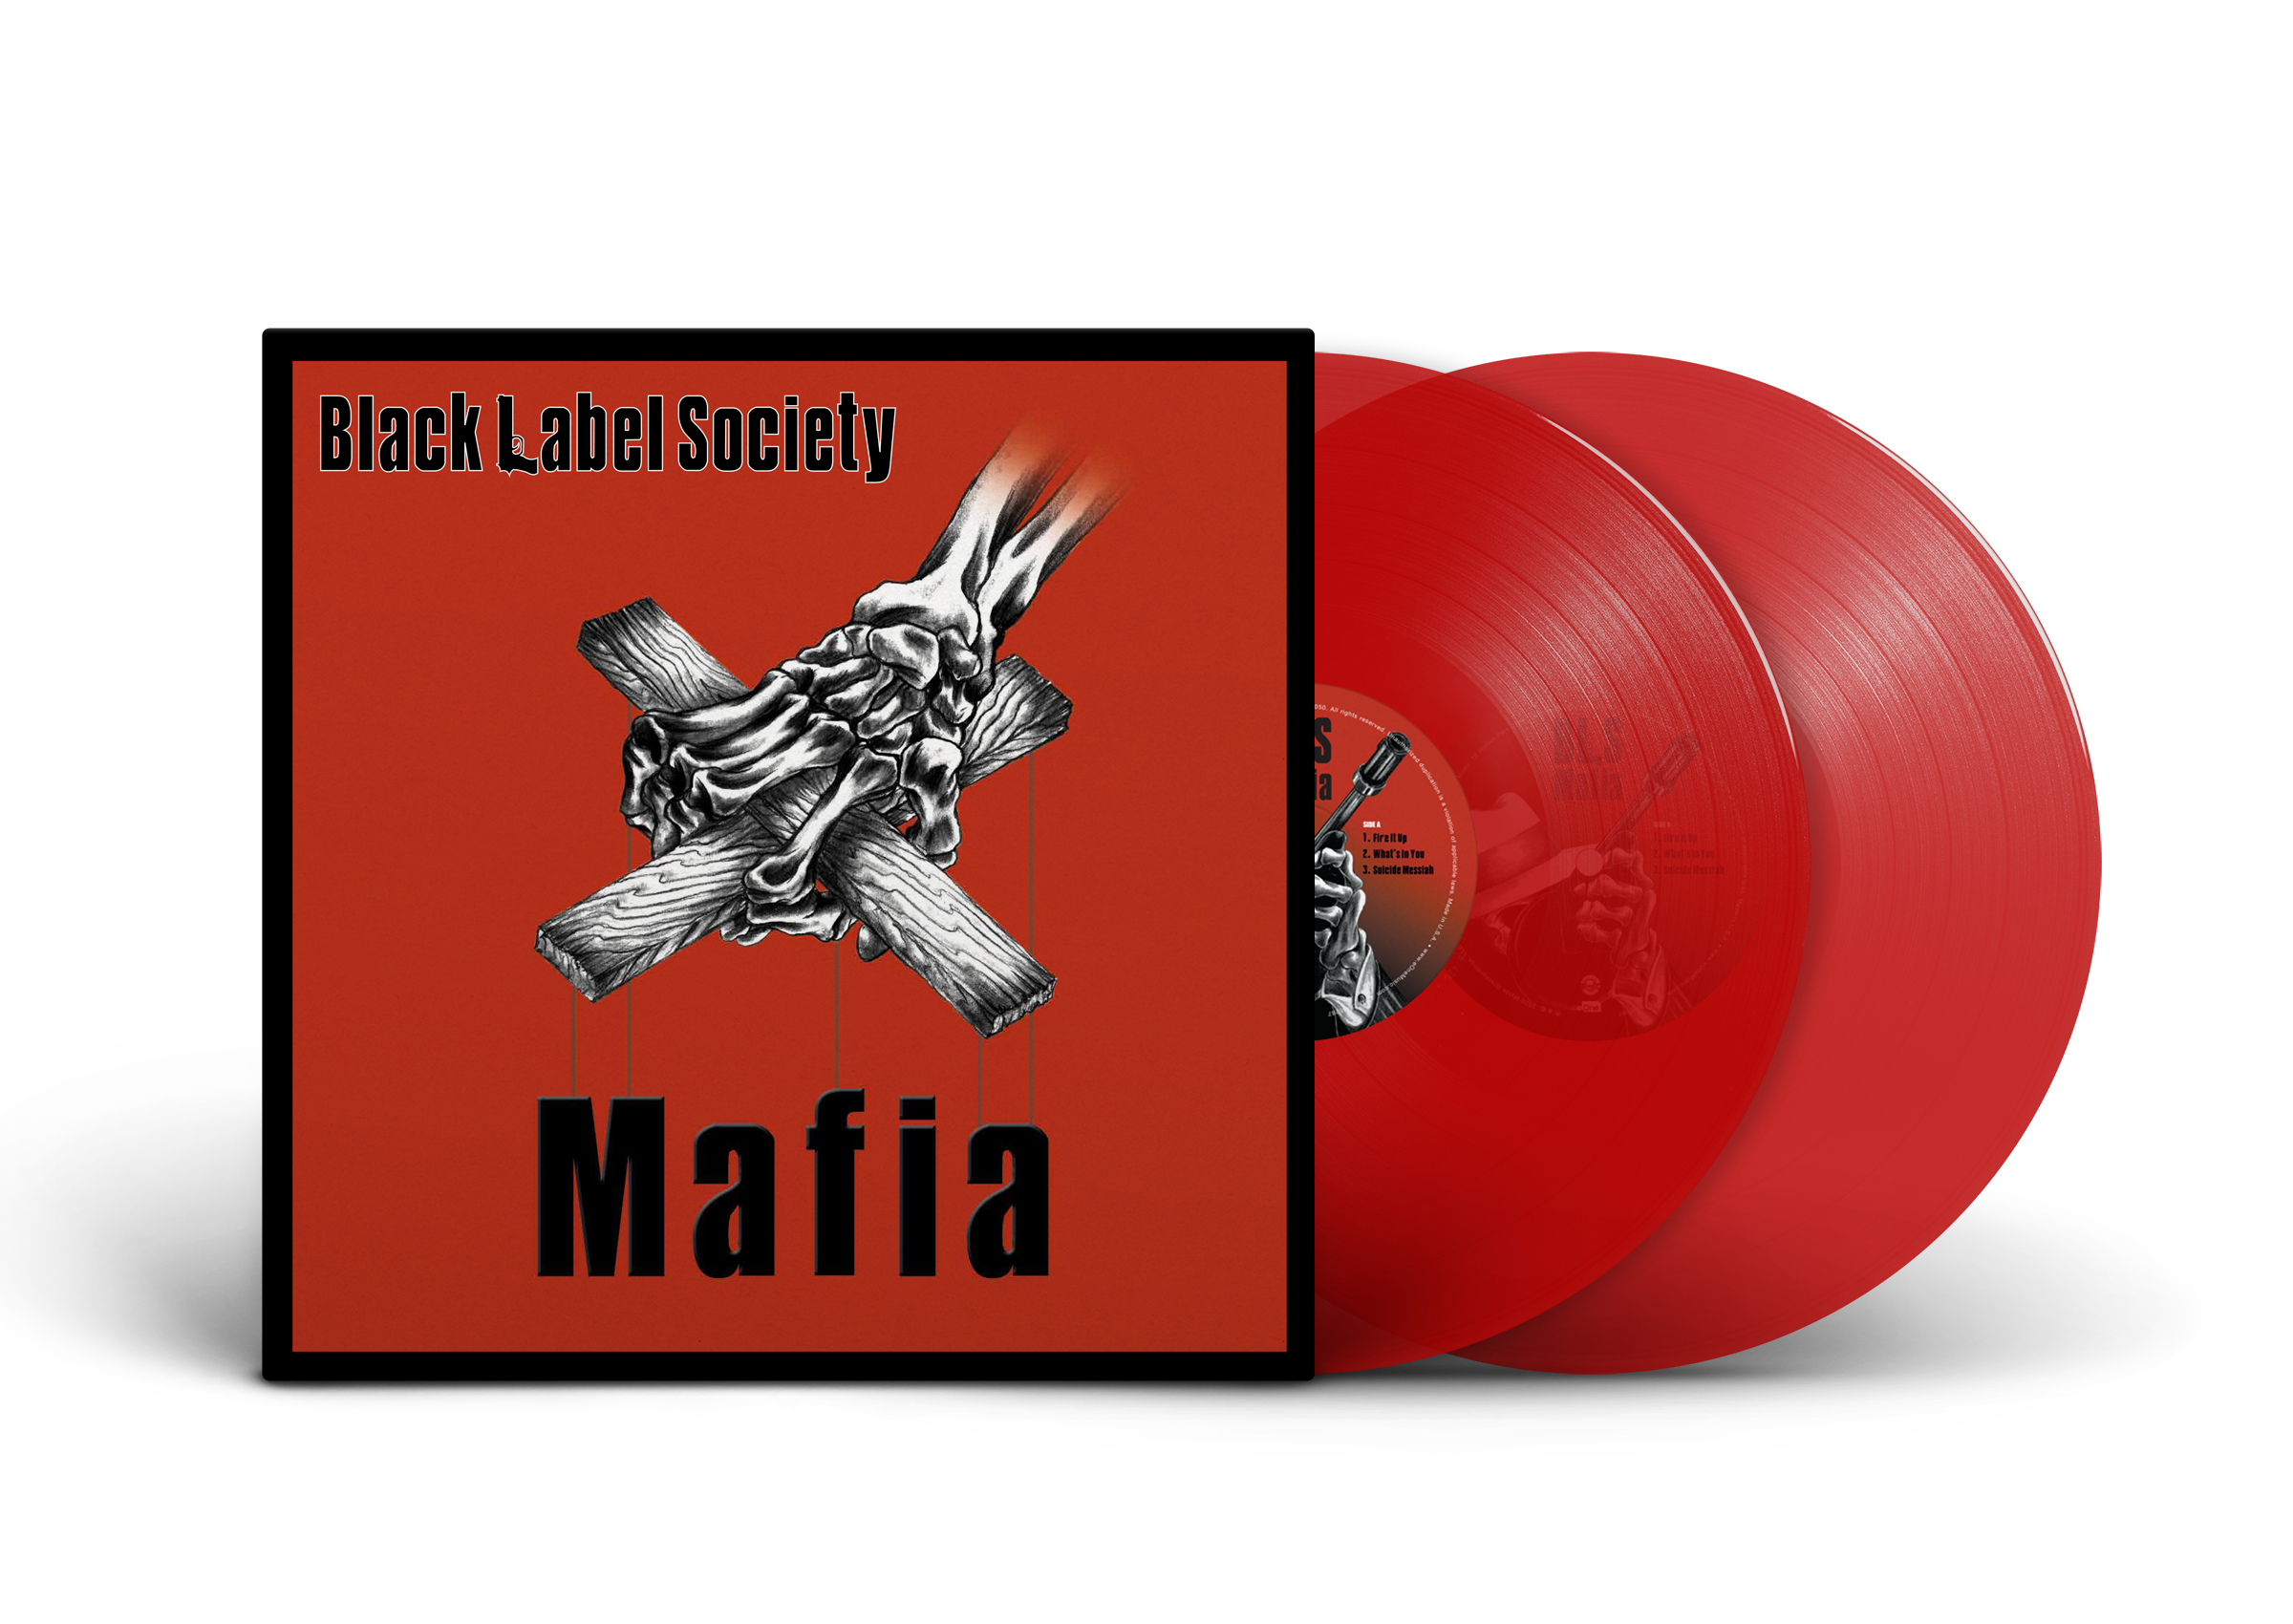 Black Label Society - Mafia Clear Red Vinyl